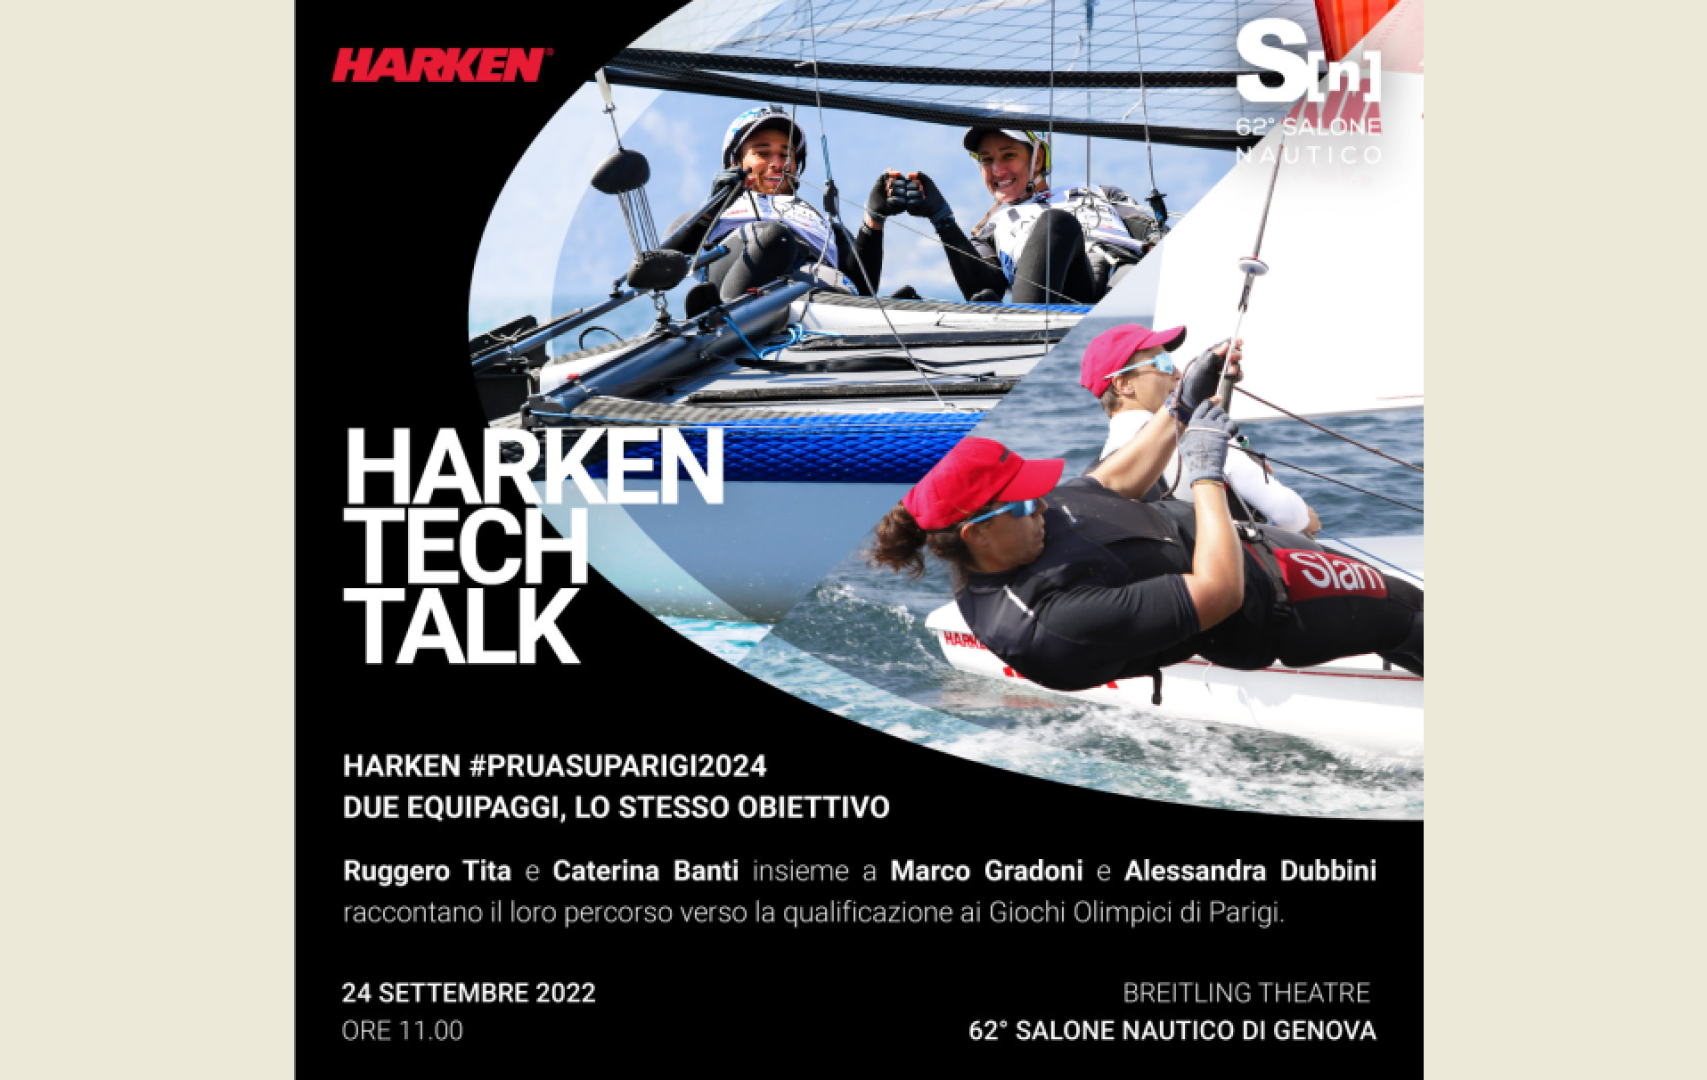 Harken Tech-Talk pruasu parigi 2024